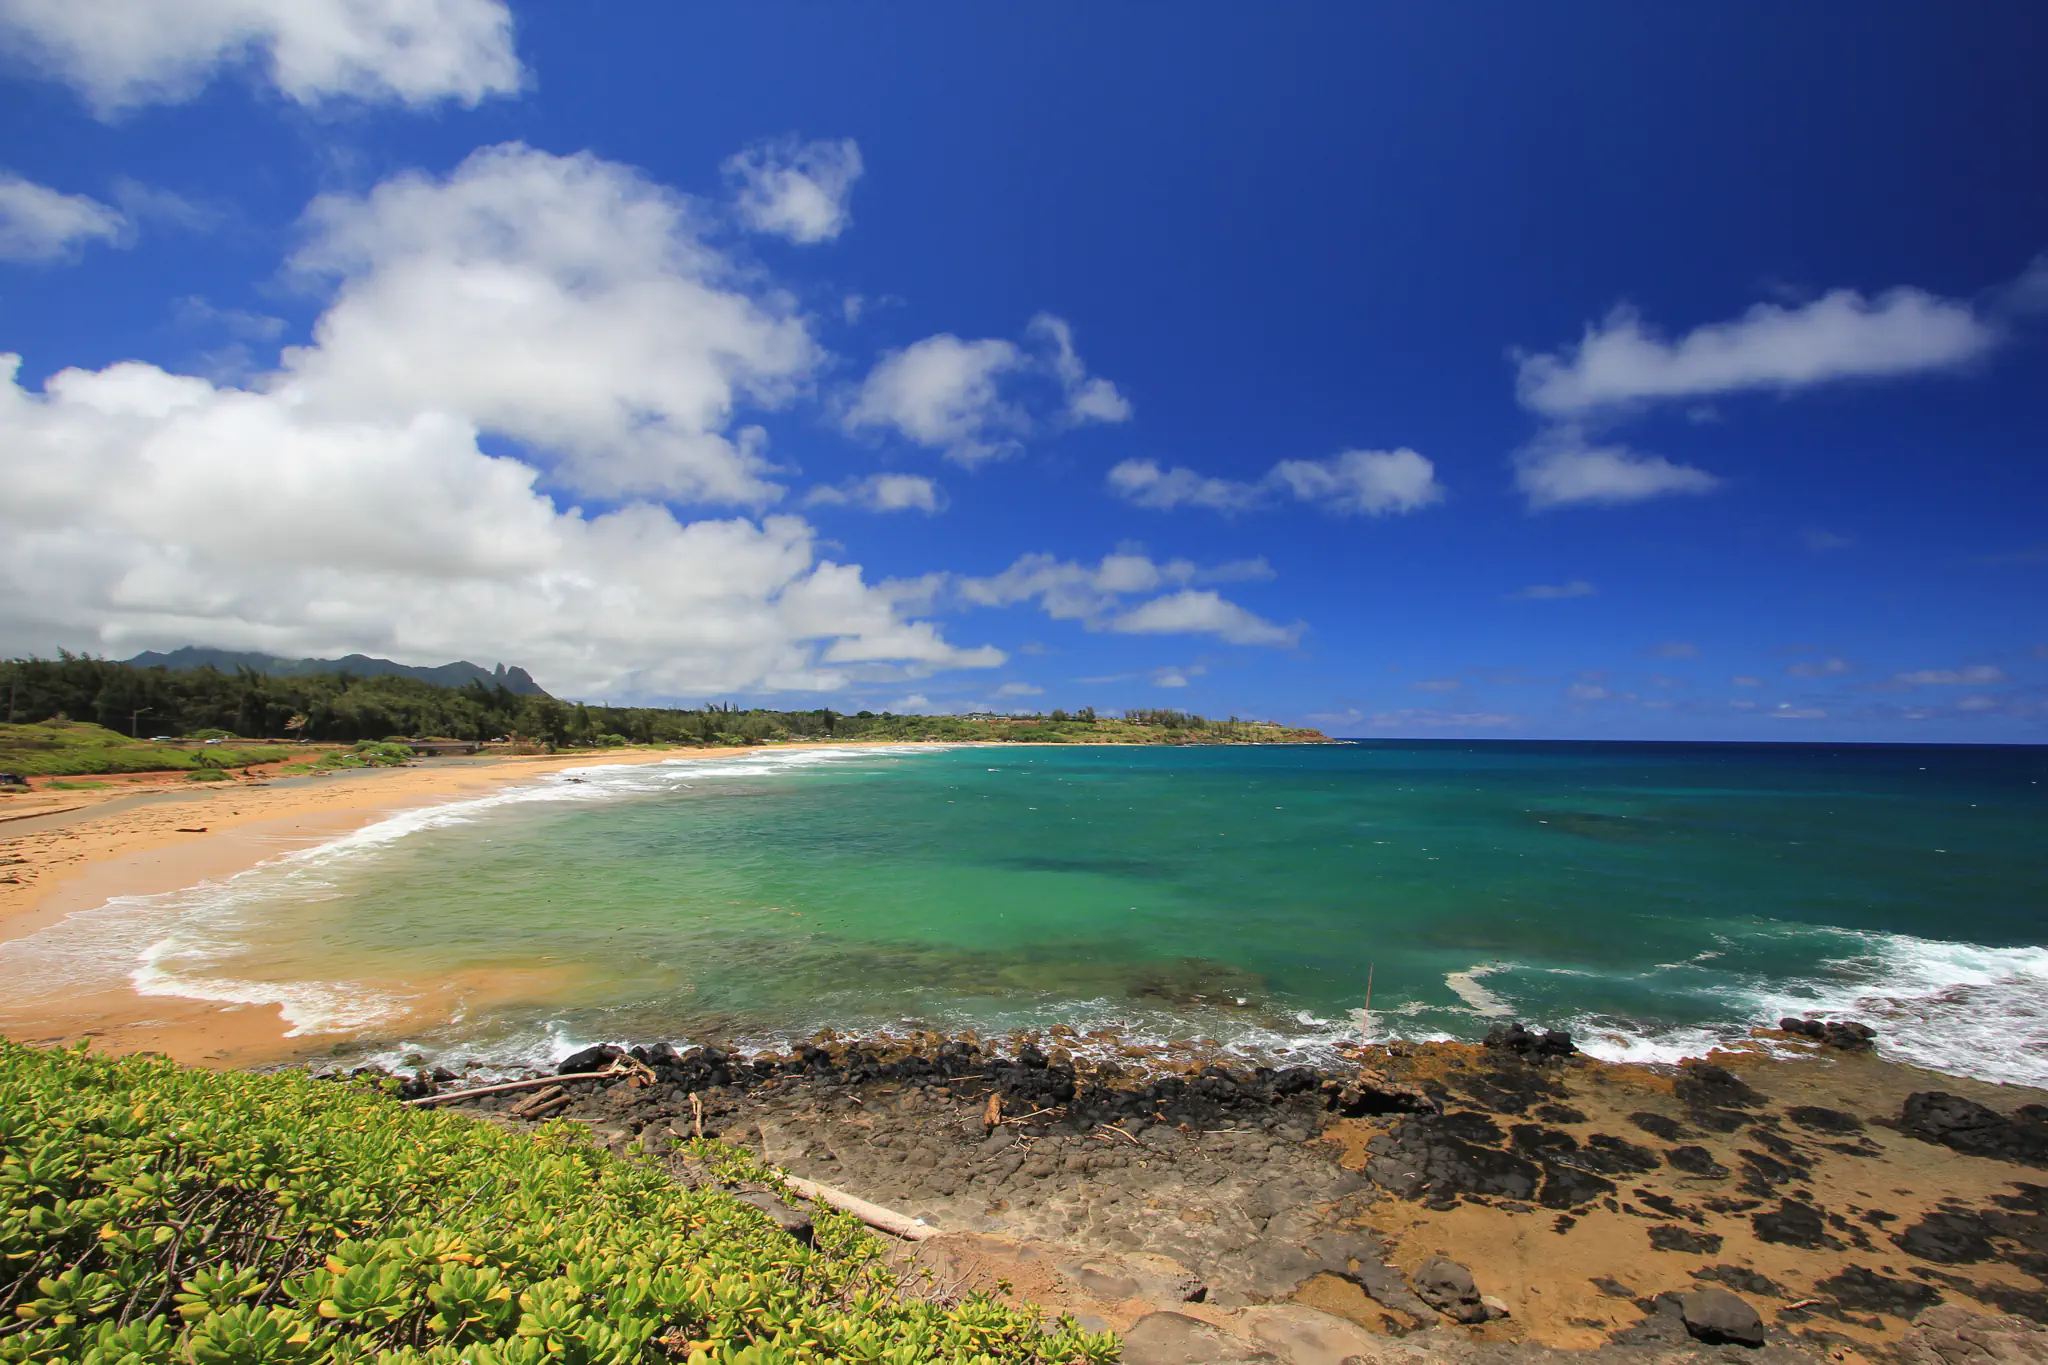 Kealia Beach is a Beach located in the city of Kapaa on Kauai, Hawaii